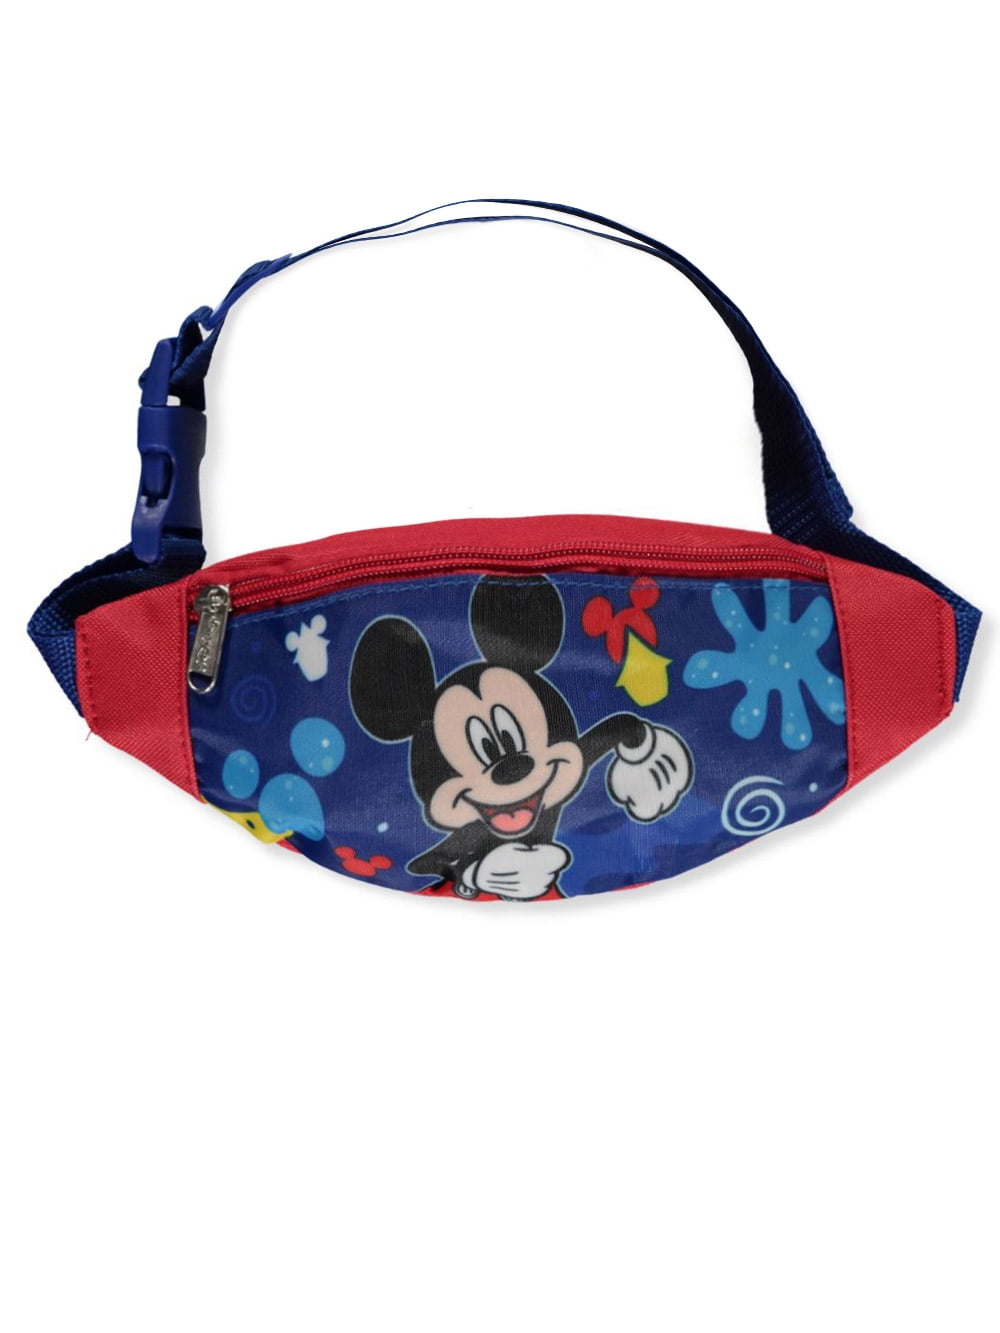 Disney Hip Bag Mickey Mouse Gloves Pouch Bum Waist Bag Belt Black & White